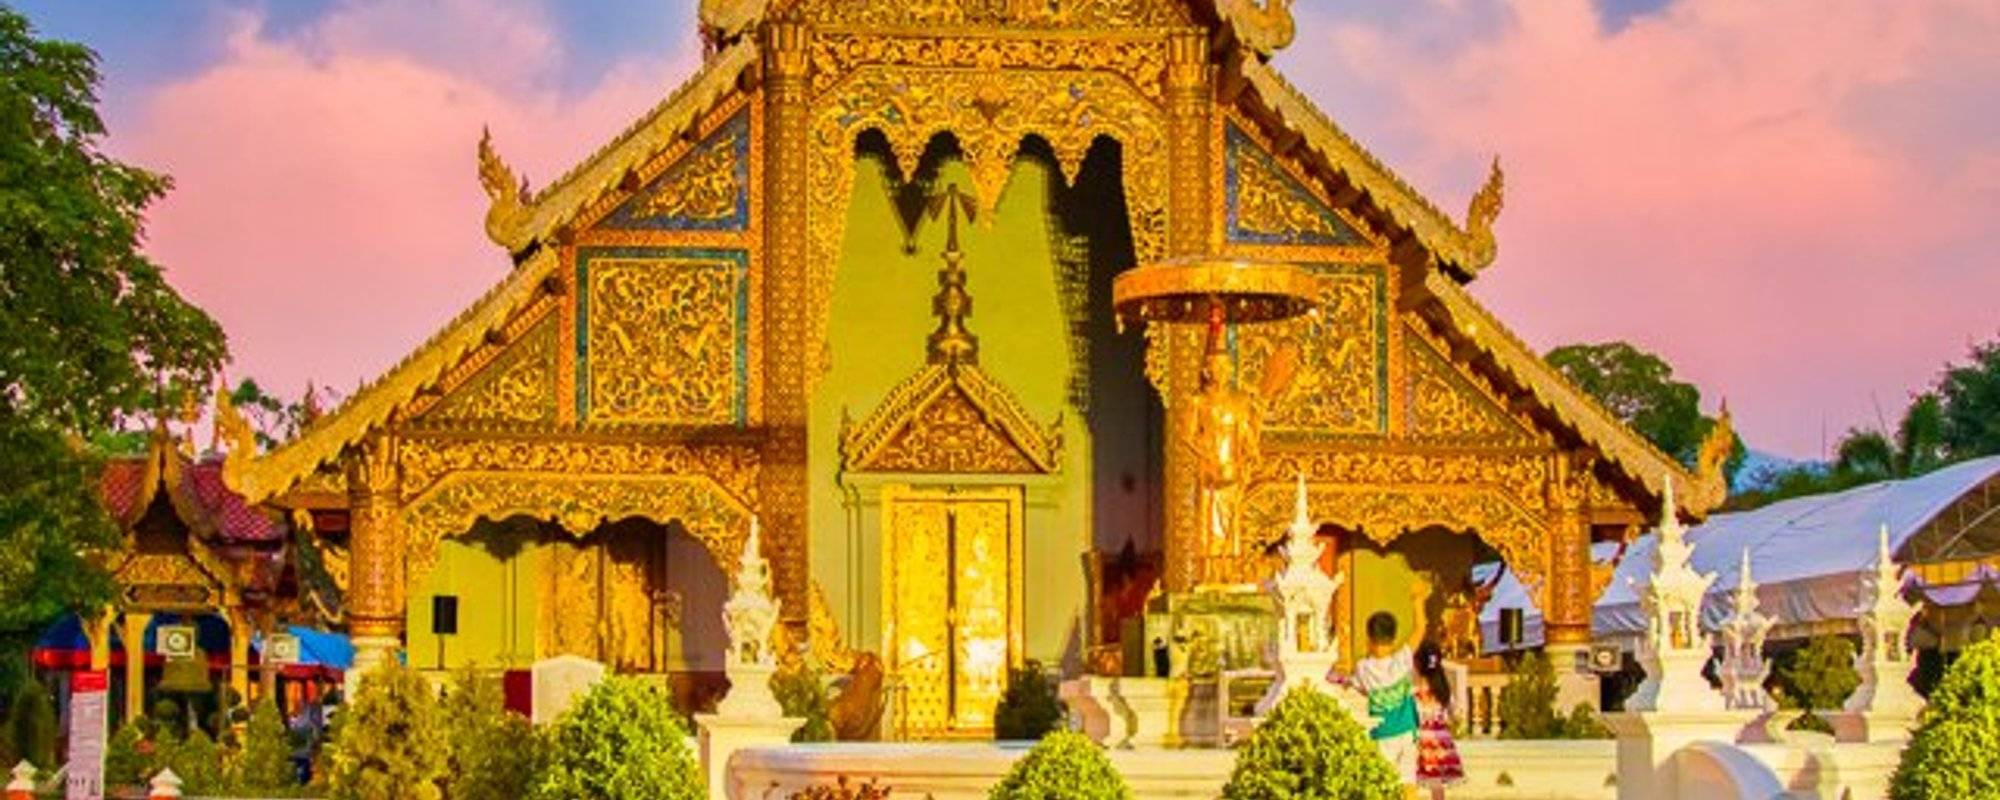 Wat Phra Singh and its golden stupas